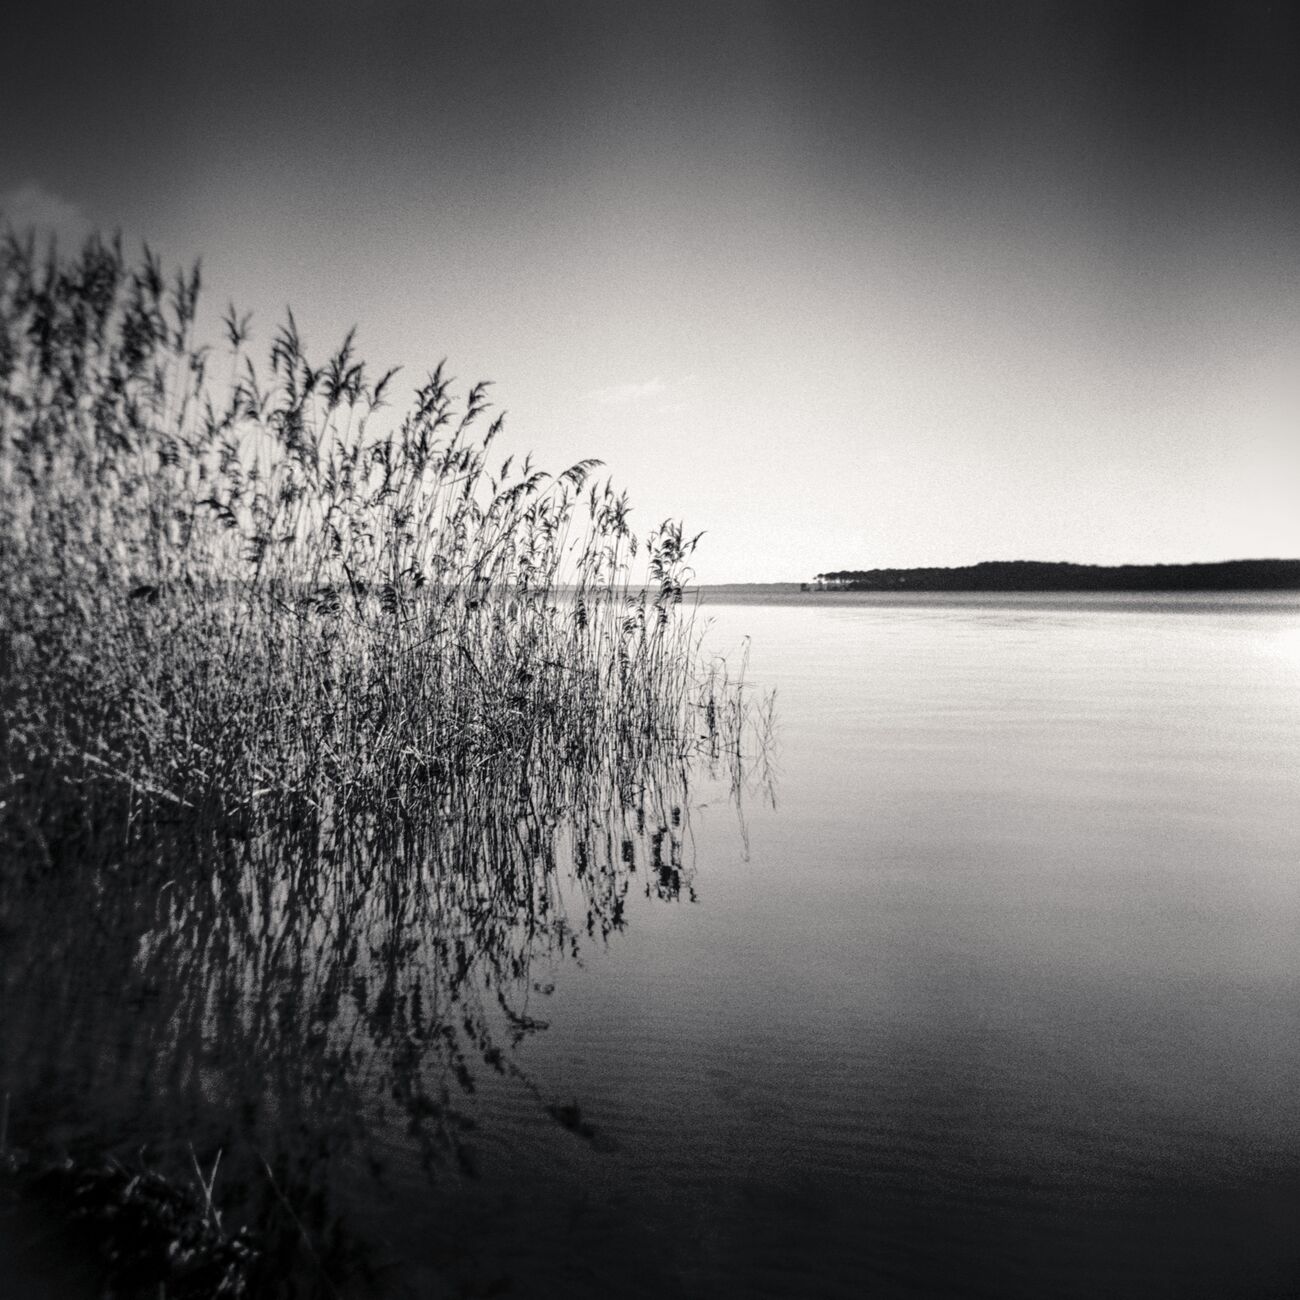 Reeds, Study 1, Carreyre, Lacanau Lake, France. January 2021. Ref-1421 - Denis Olivier Photography